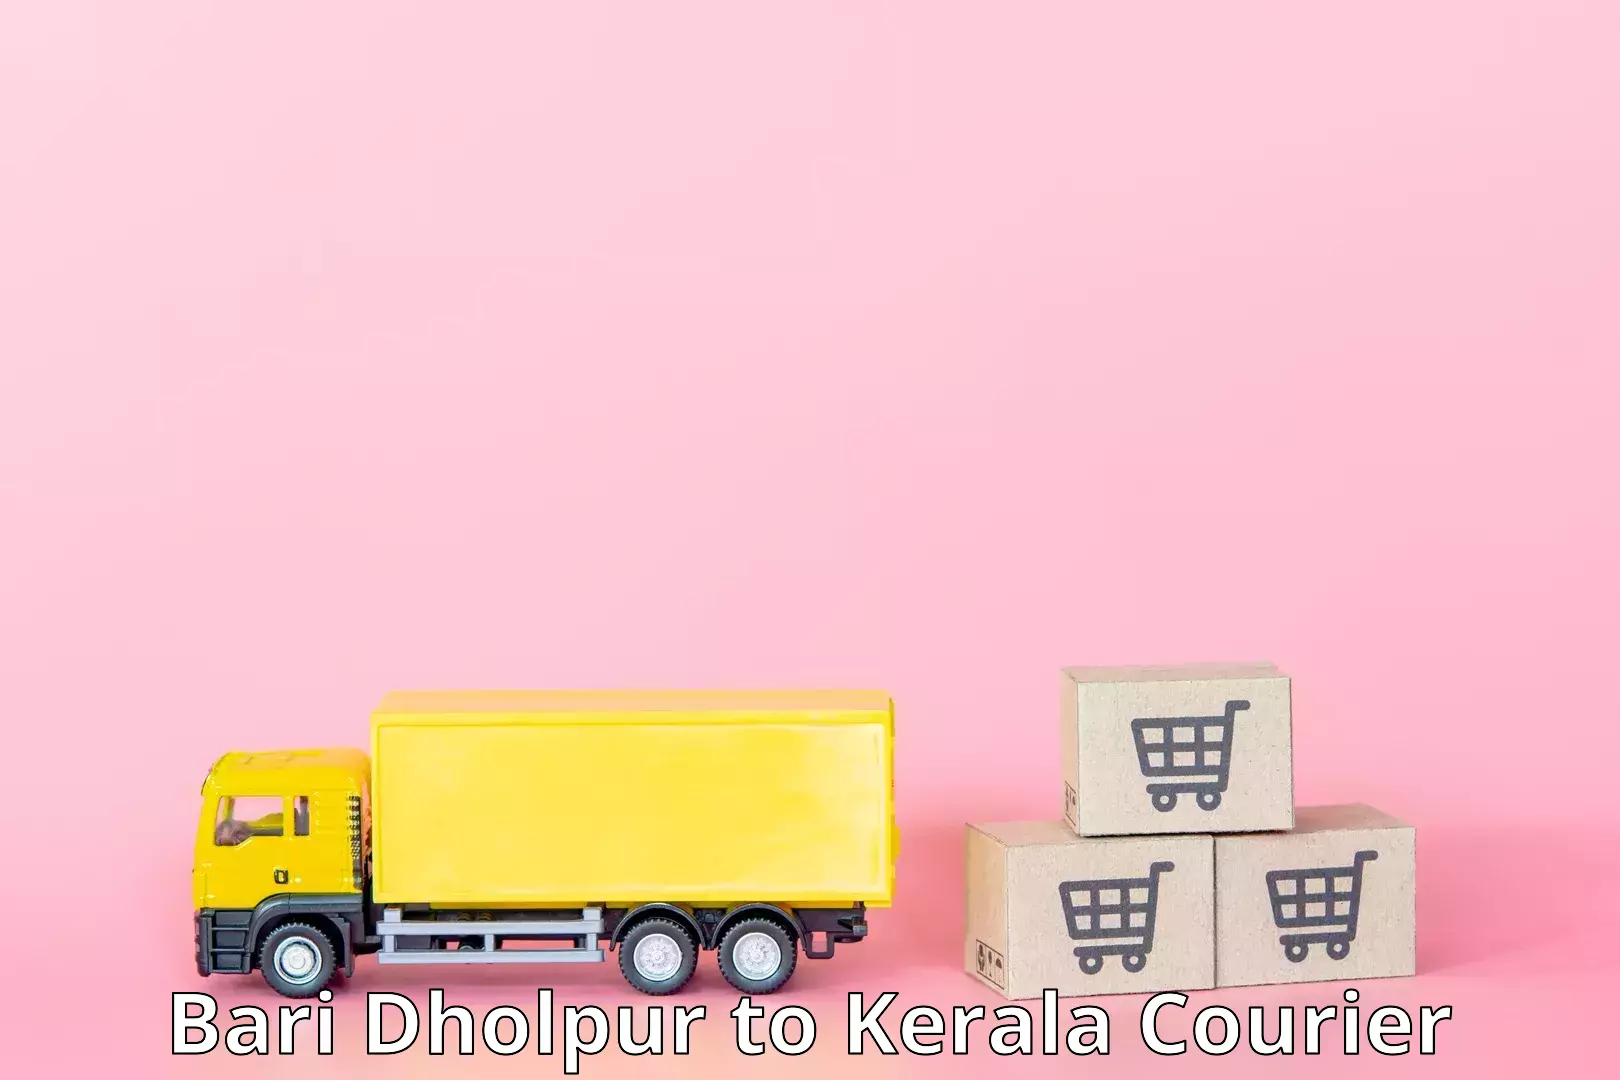 Global logistics network Bari Dholpur to Cochin Port Kochi